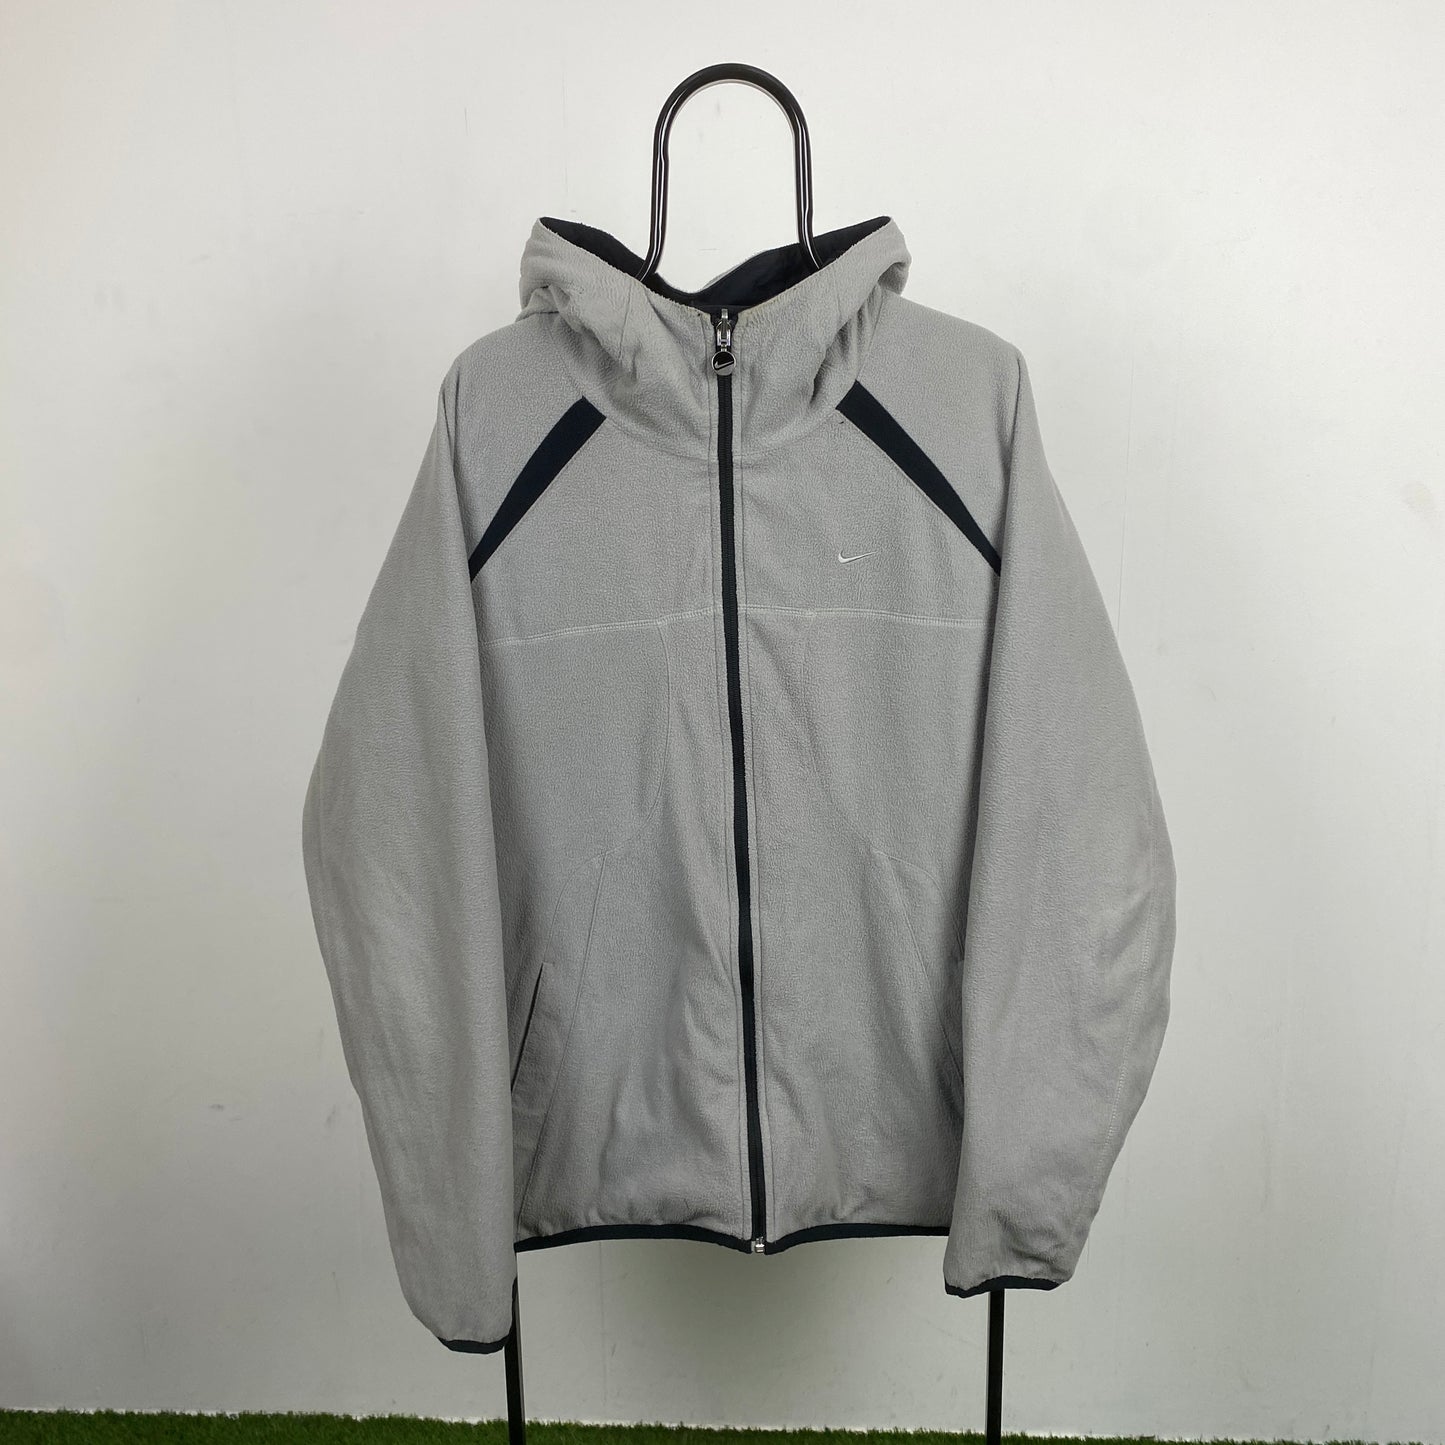 00s Nike Reversible Fleece Coat Jacket Black Brown Large